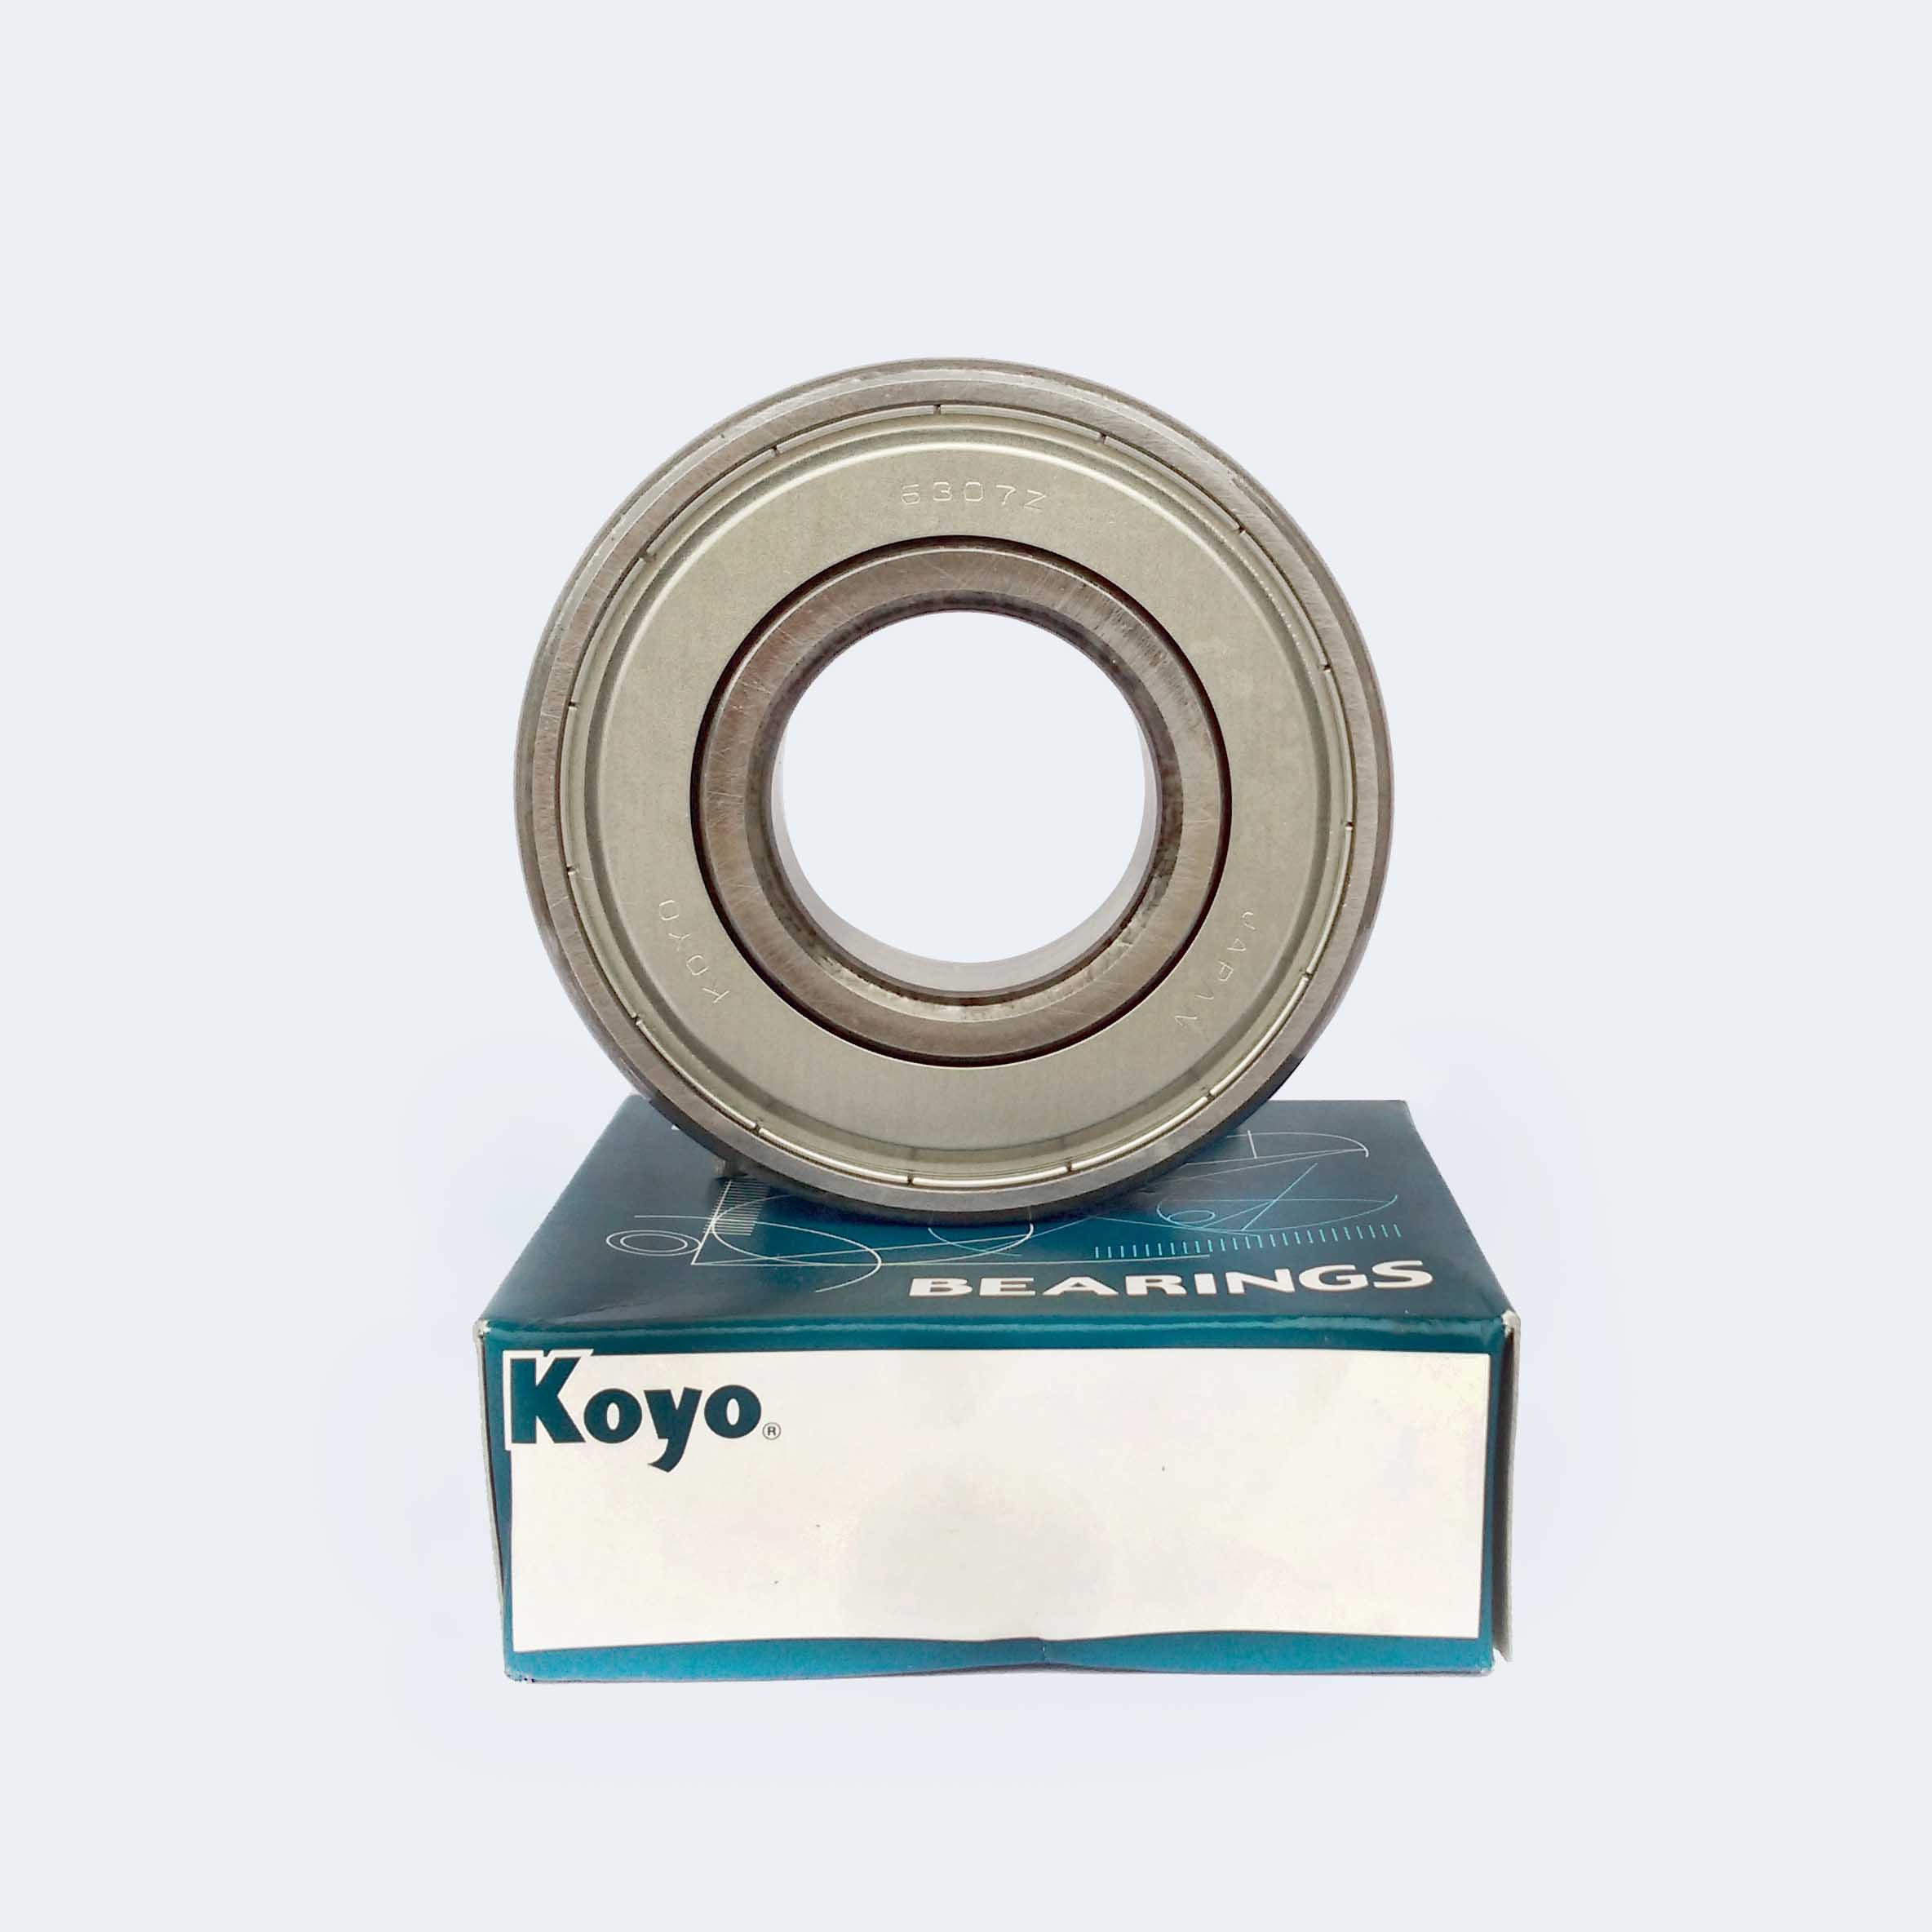 KOYO深溝球軸承,61807型號規格,日本品牌進口軸承